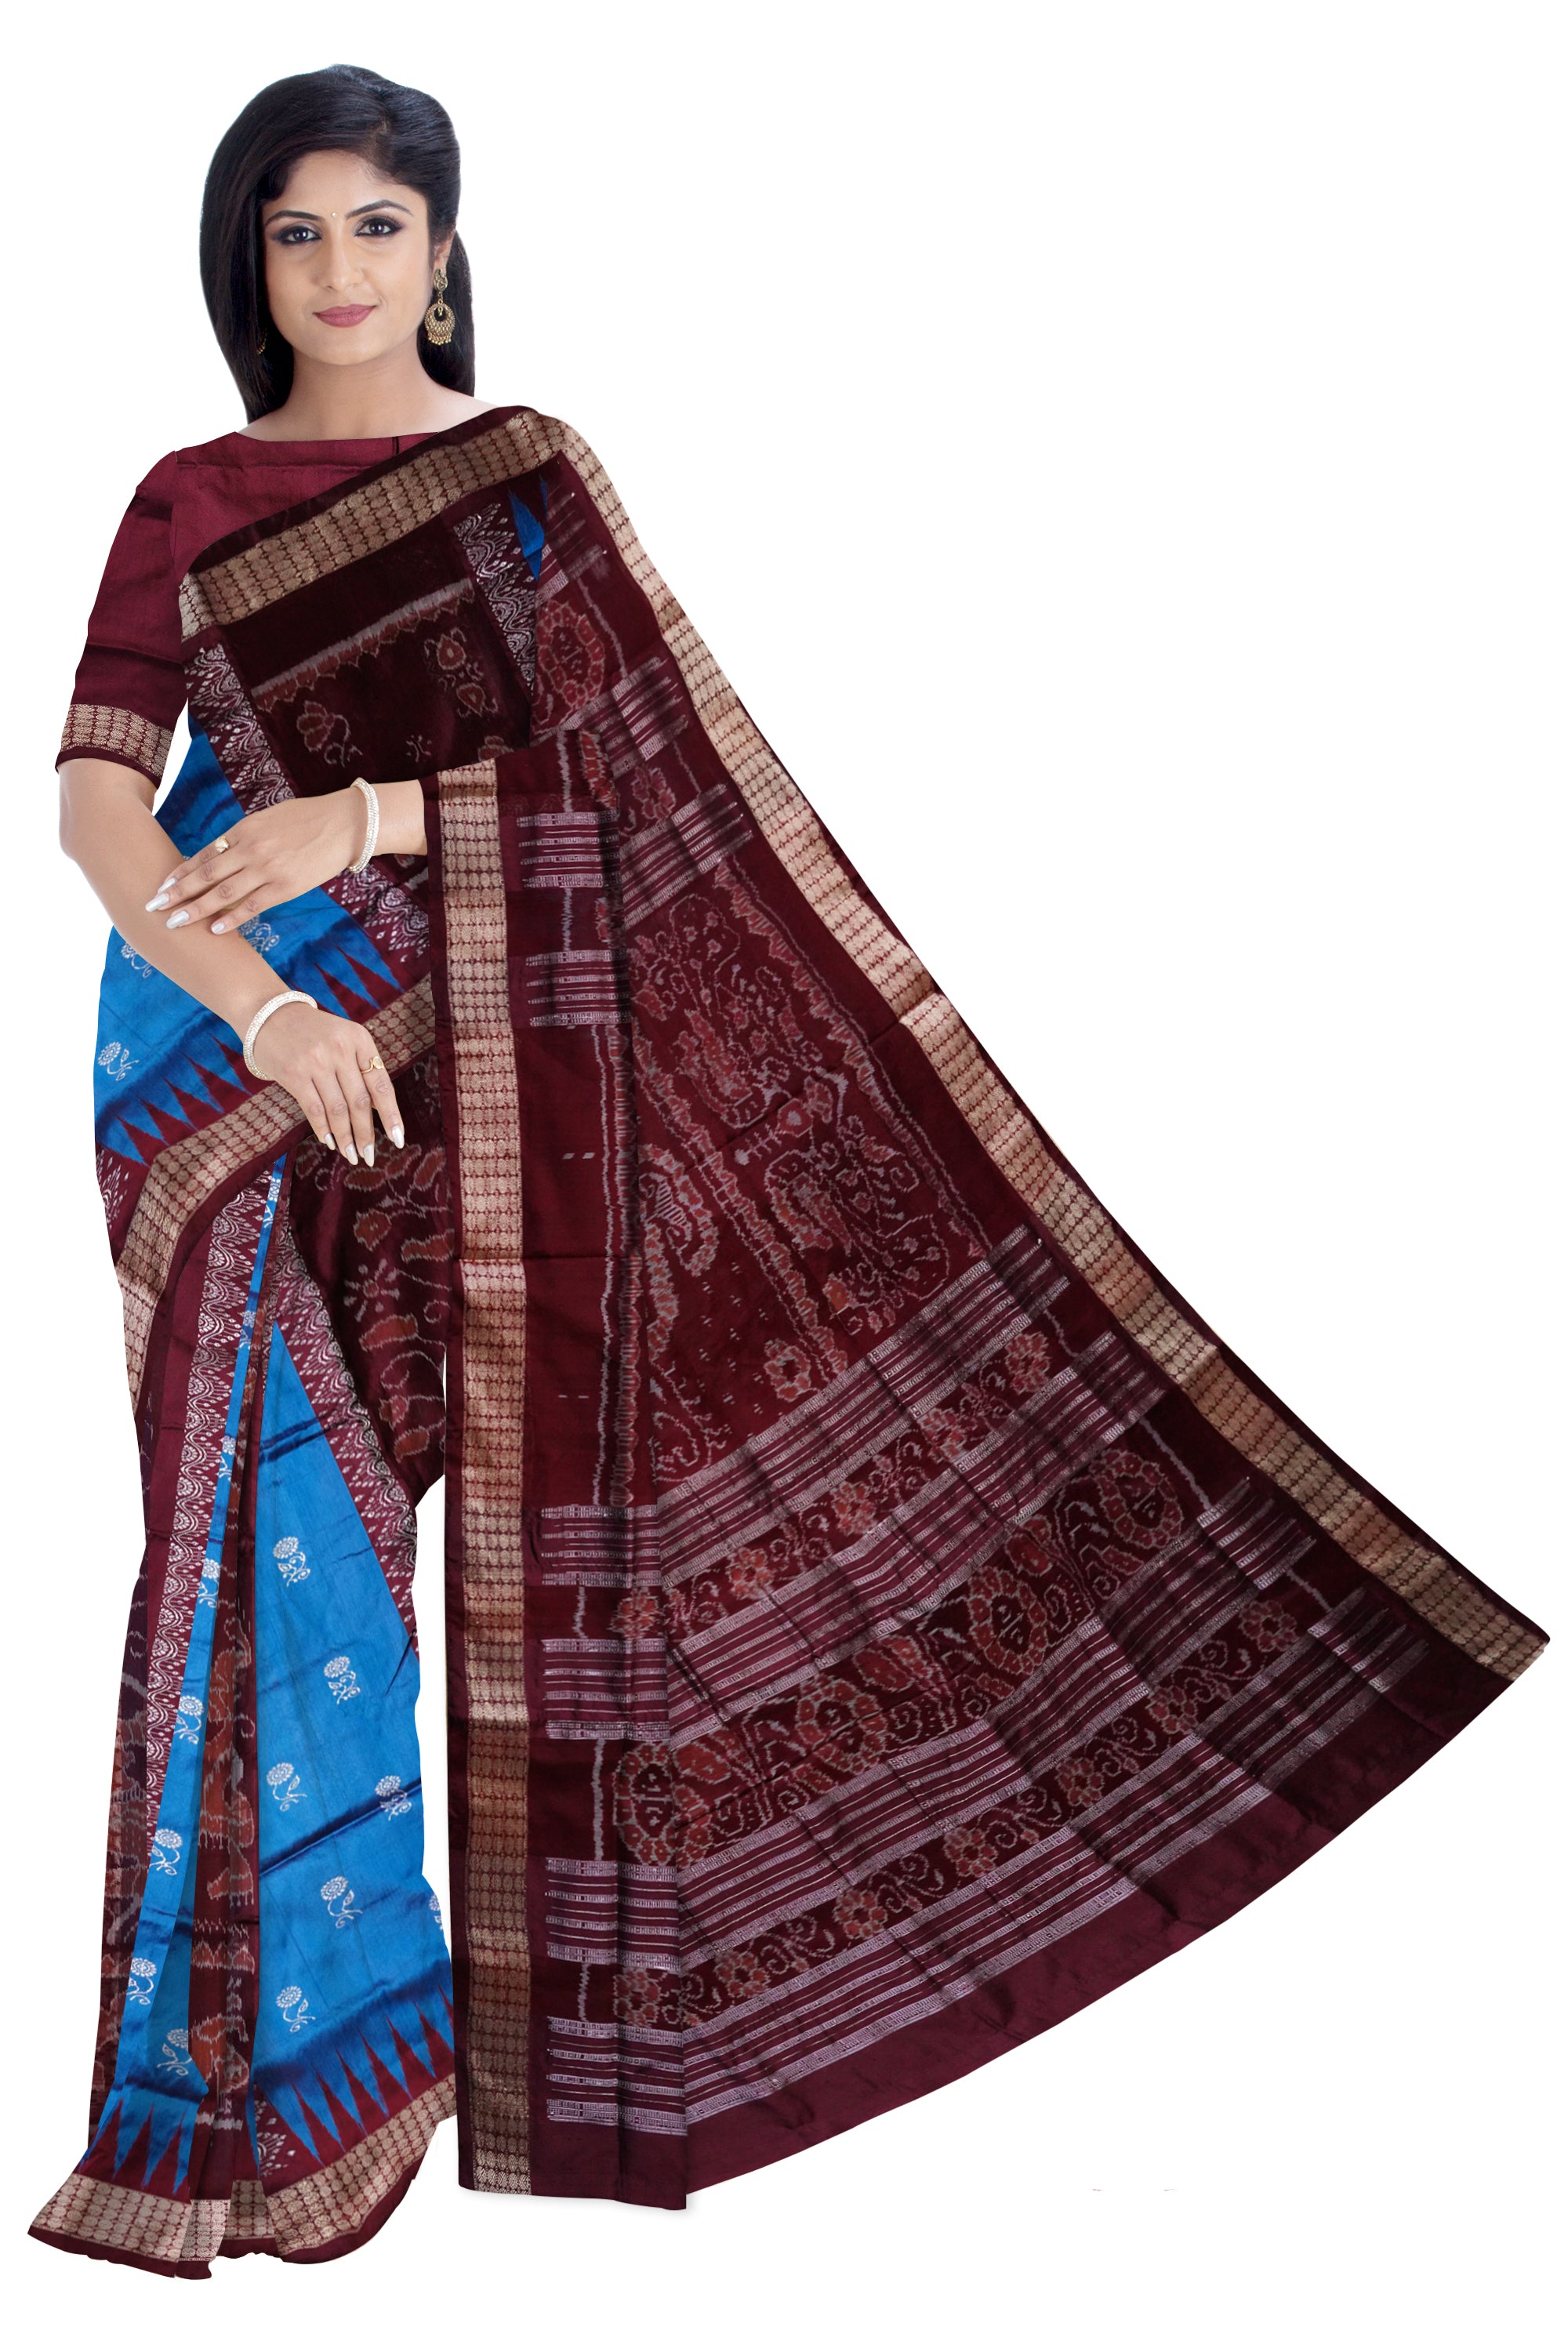 Nartaki pattern bomkei  pata saree in sky and coffee color. - Koshali Arts & Crafts Enterprise